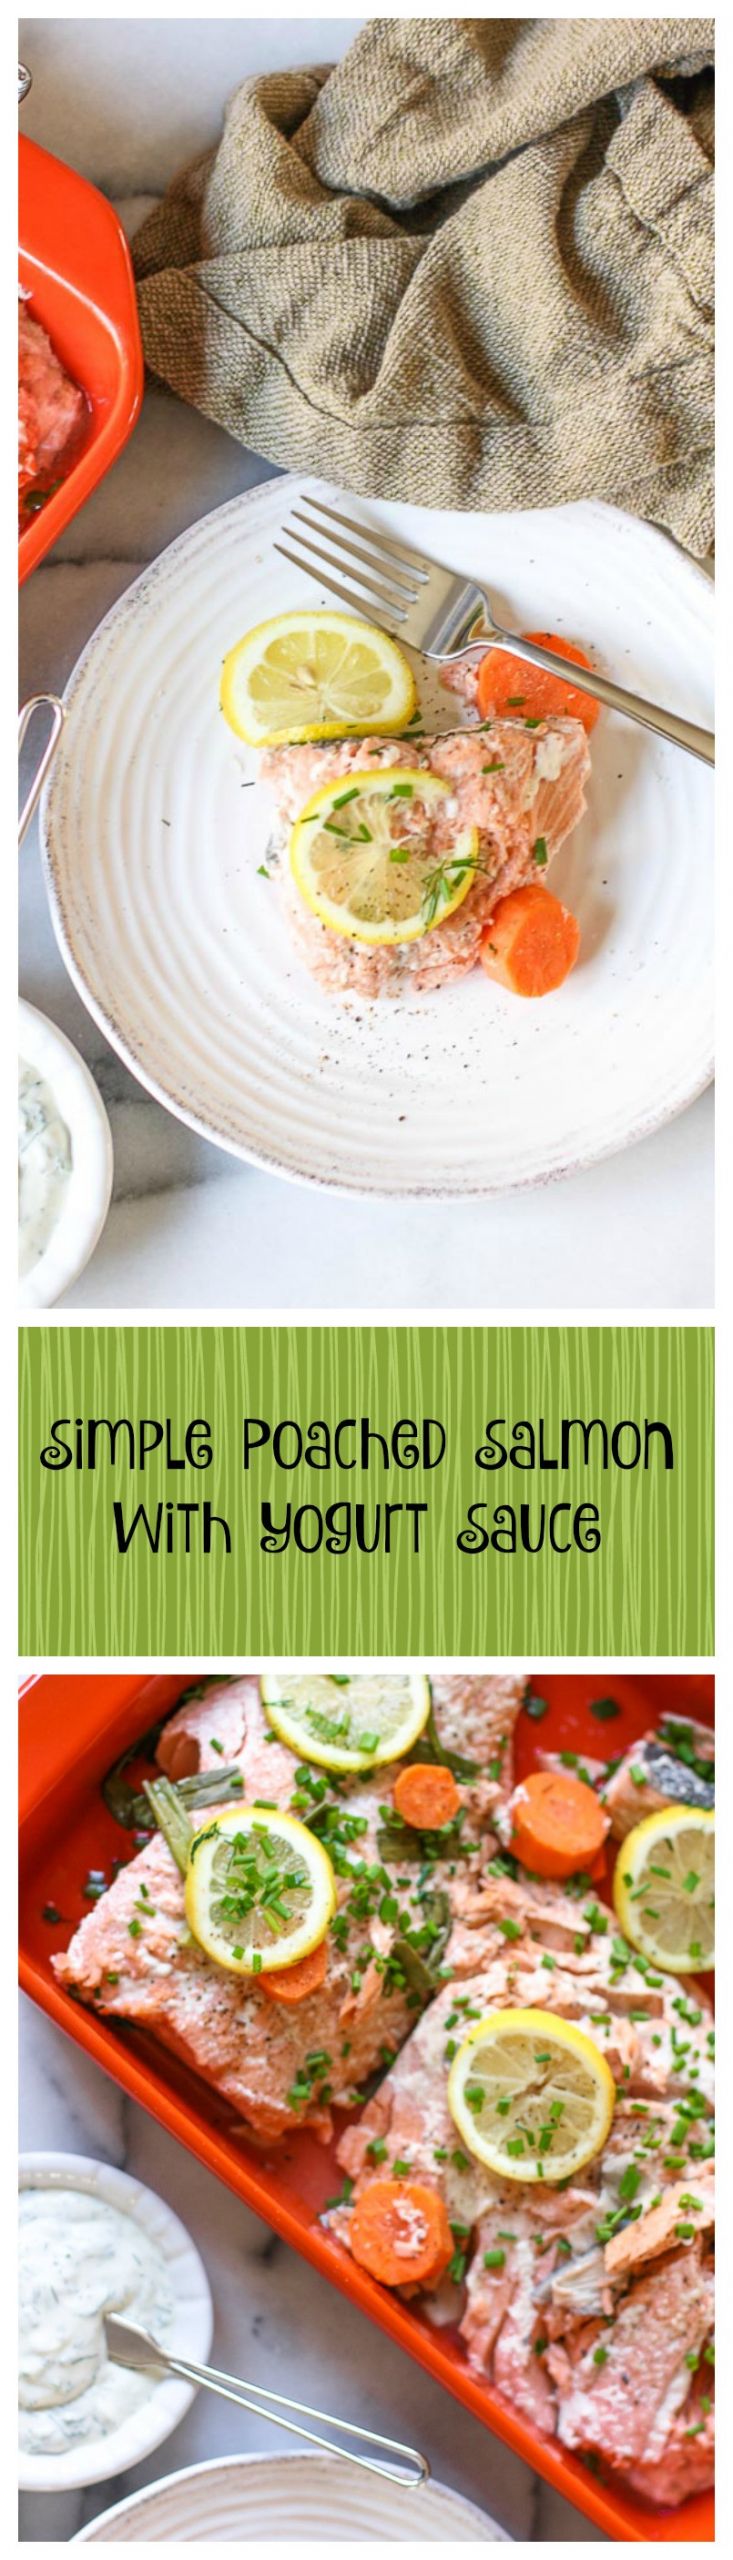 Yogurt Sauces For Salmon
 Simple Poached Salmon with Yogurt Sauce Recipe